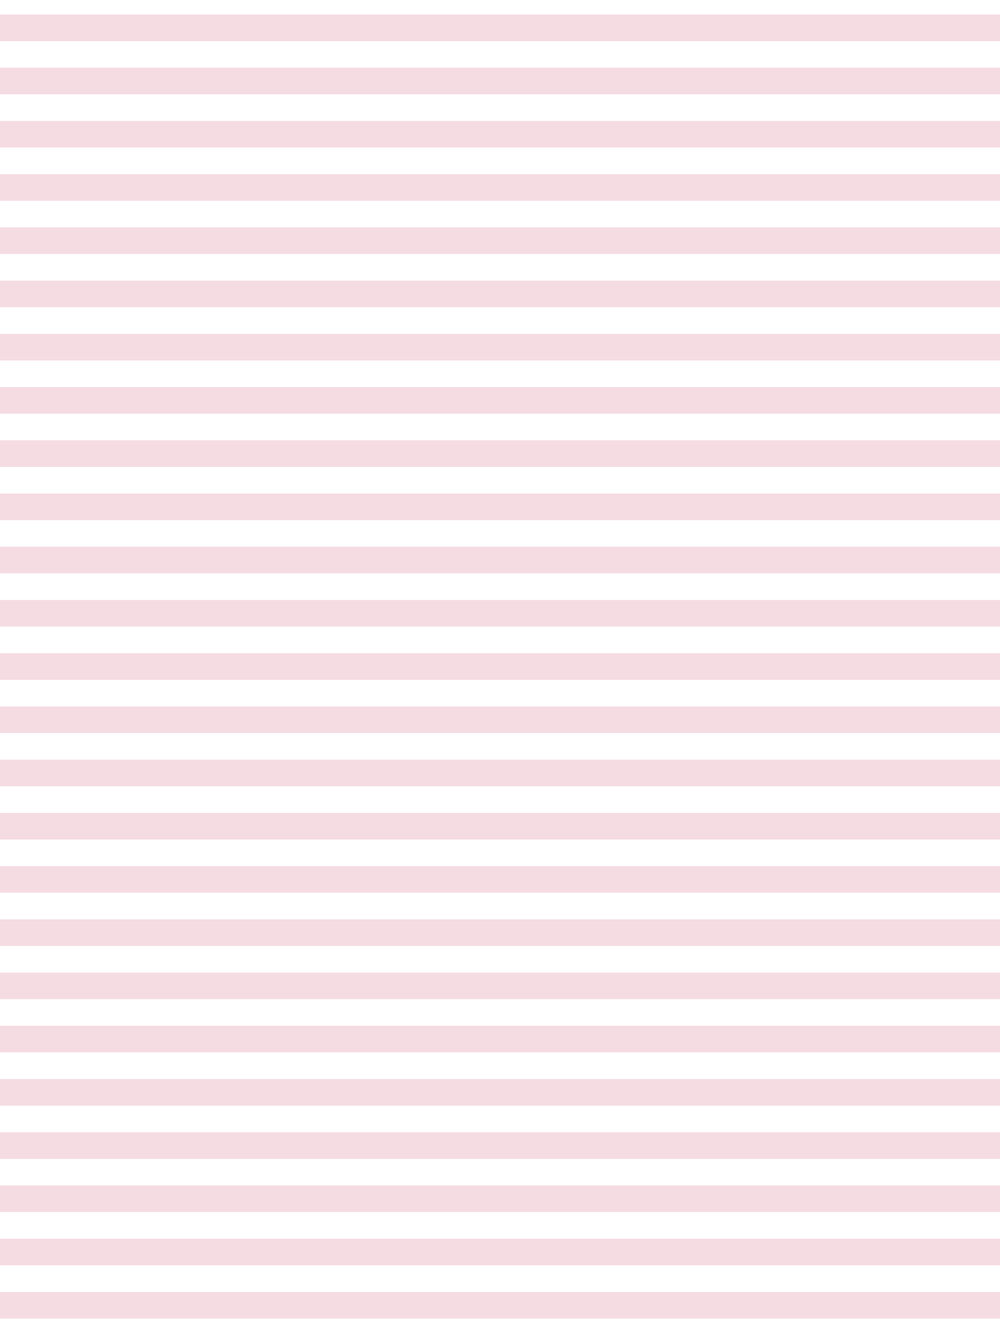 Stripes_Light+Pink_300+dpi.jpg